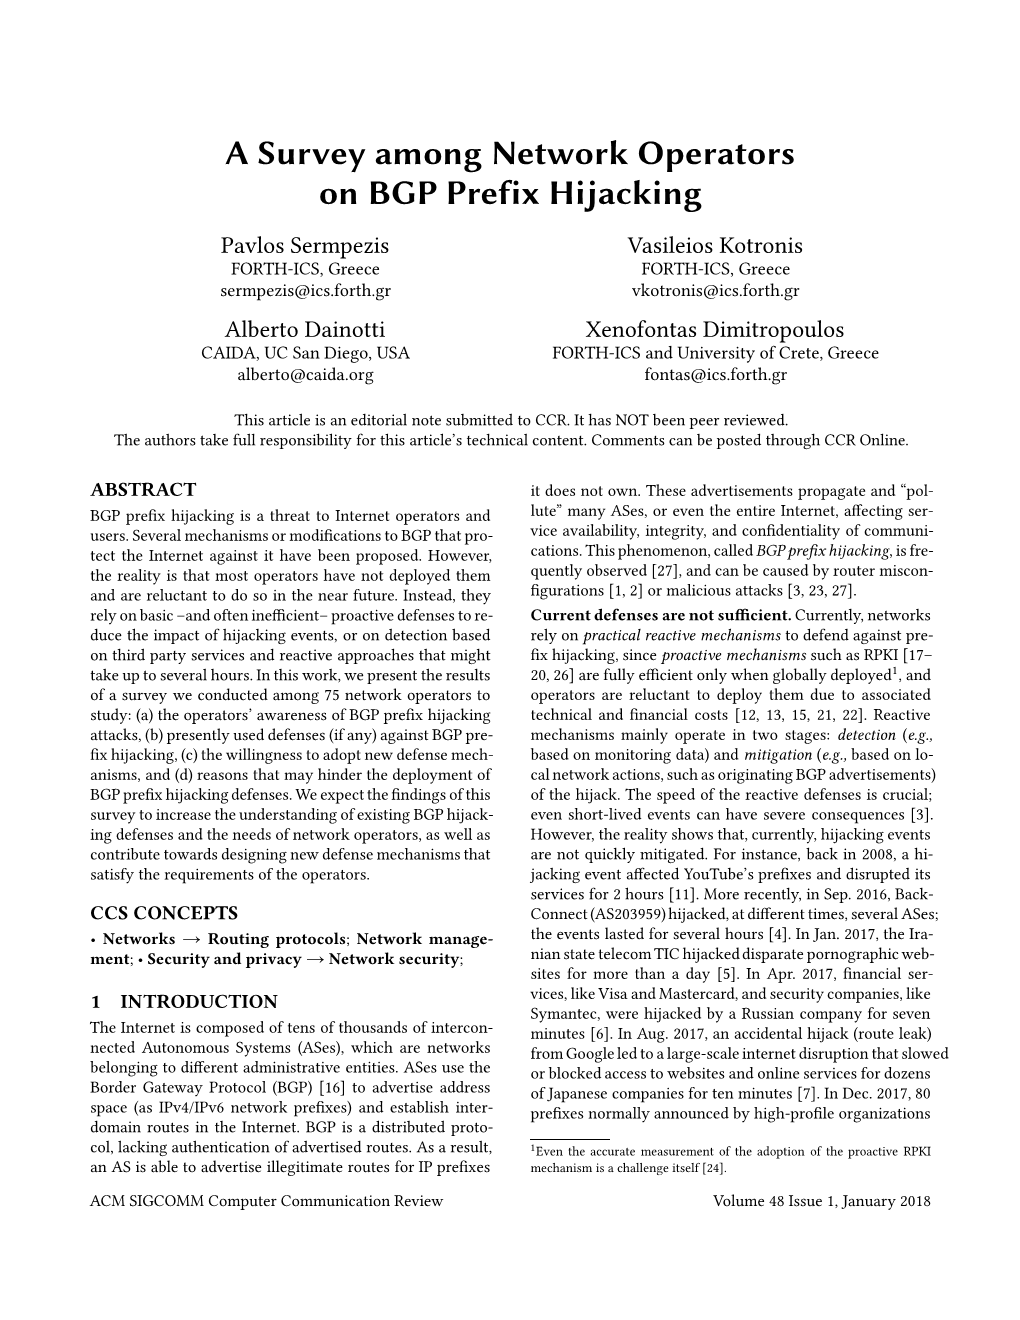 A Survey Among Network Operatorson BGP Prefix Hijacking